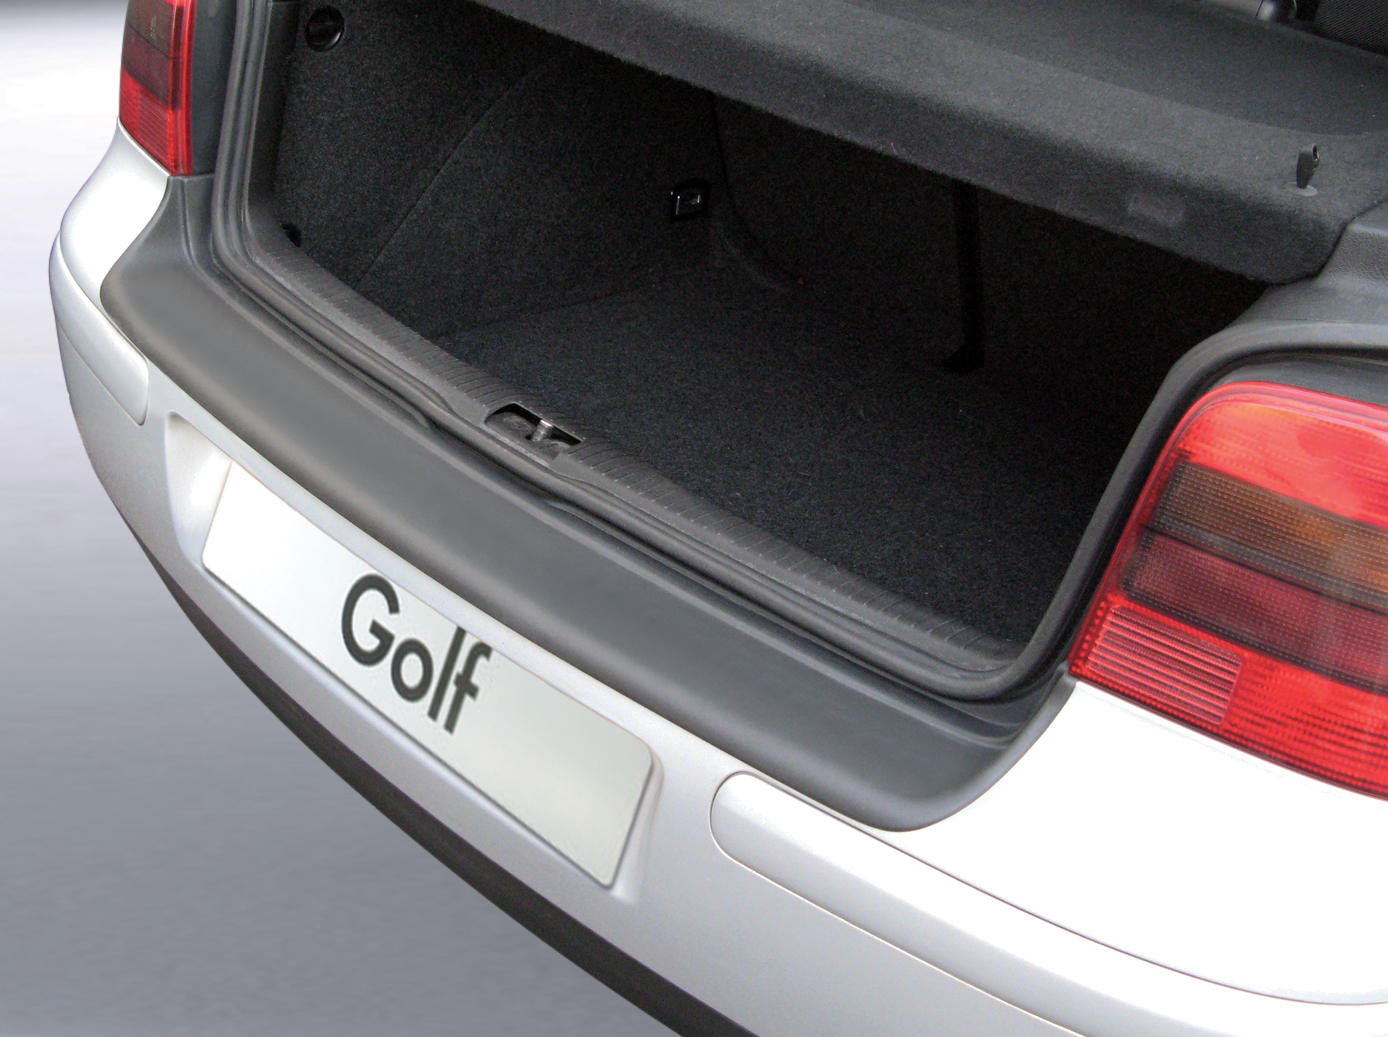 (1J) www.sonnenschutz-pkw.de - IV 4 LADEKANTENSCHUTZ VW Golf